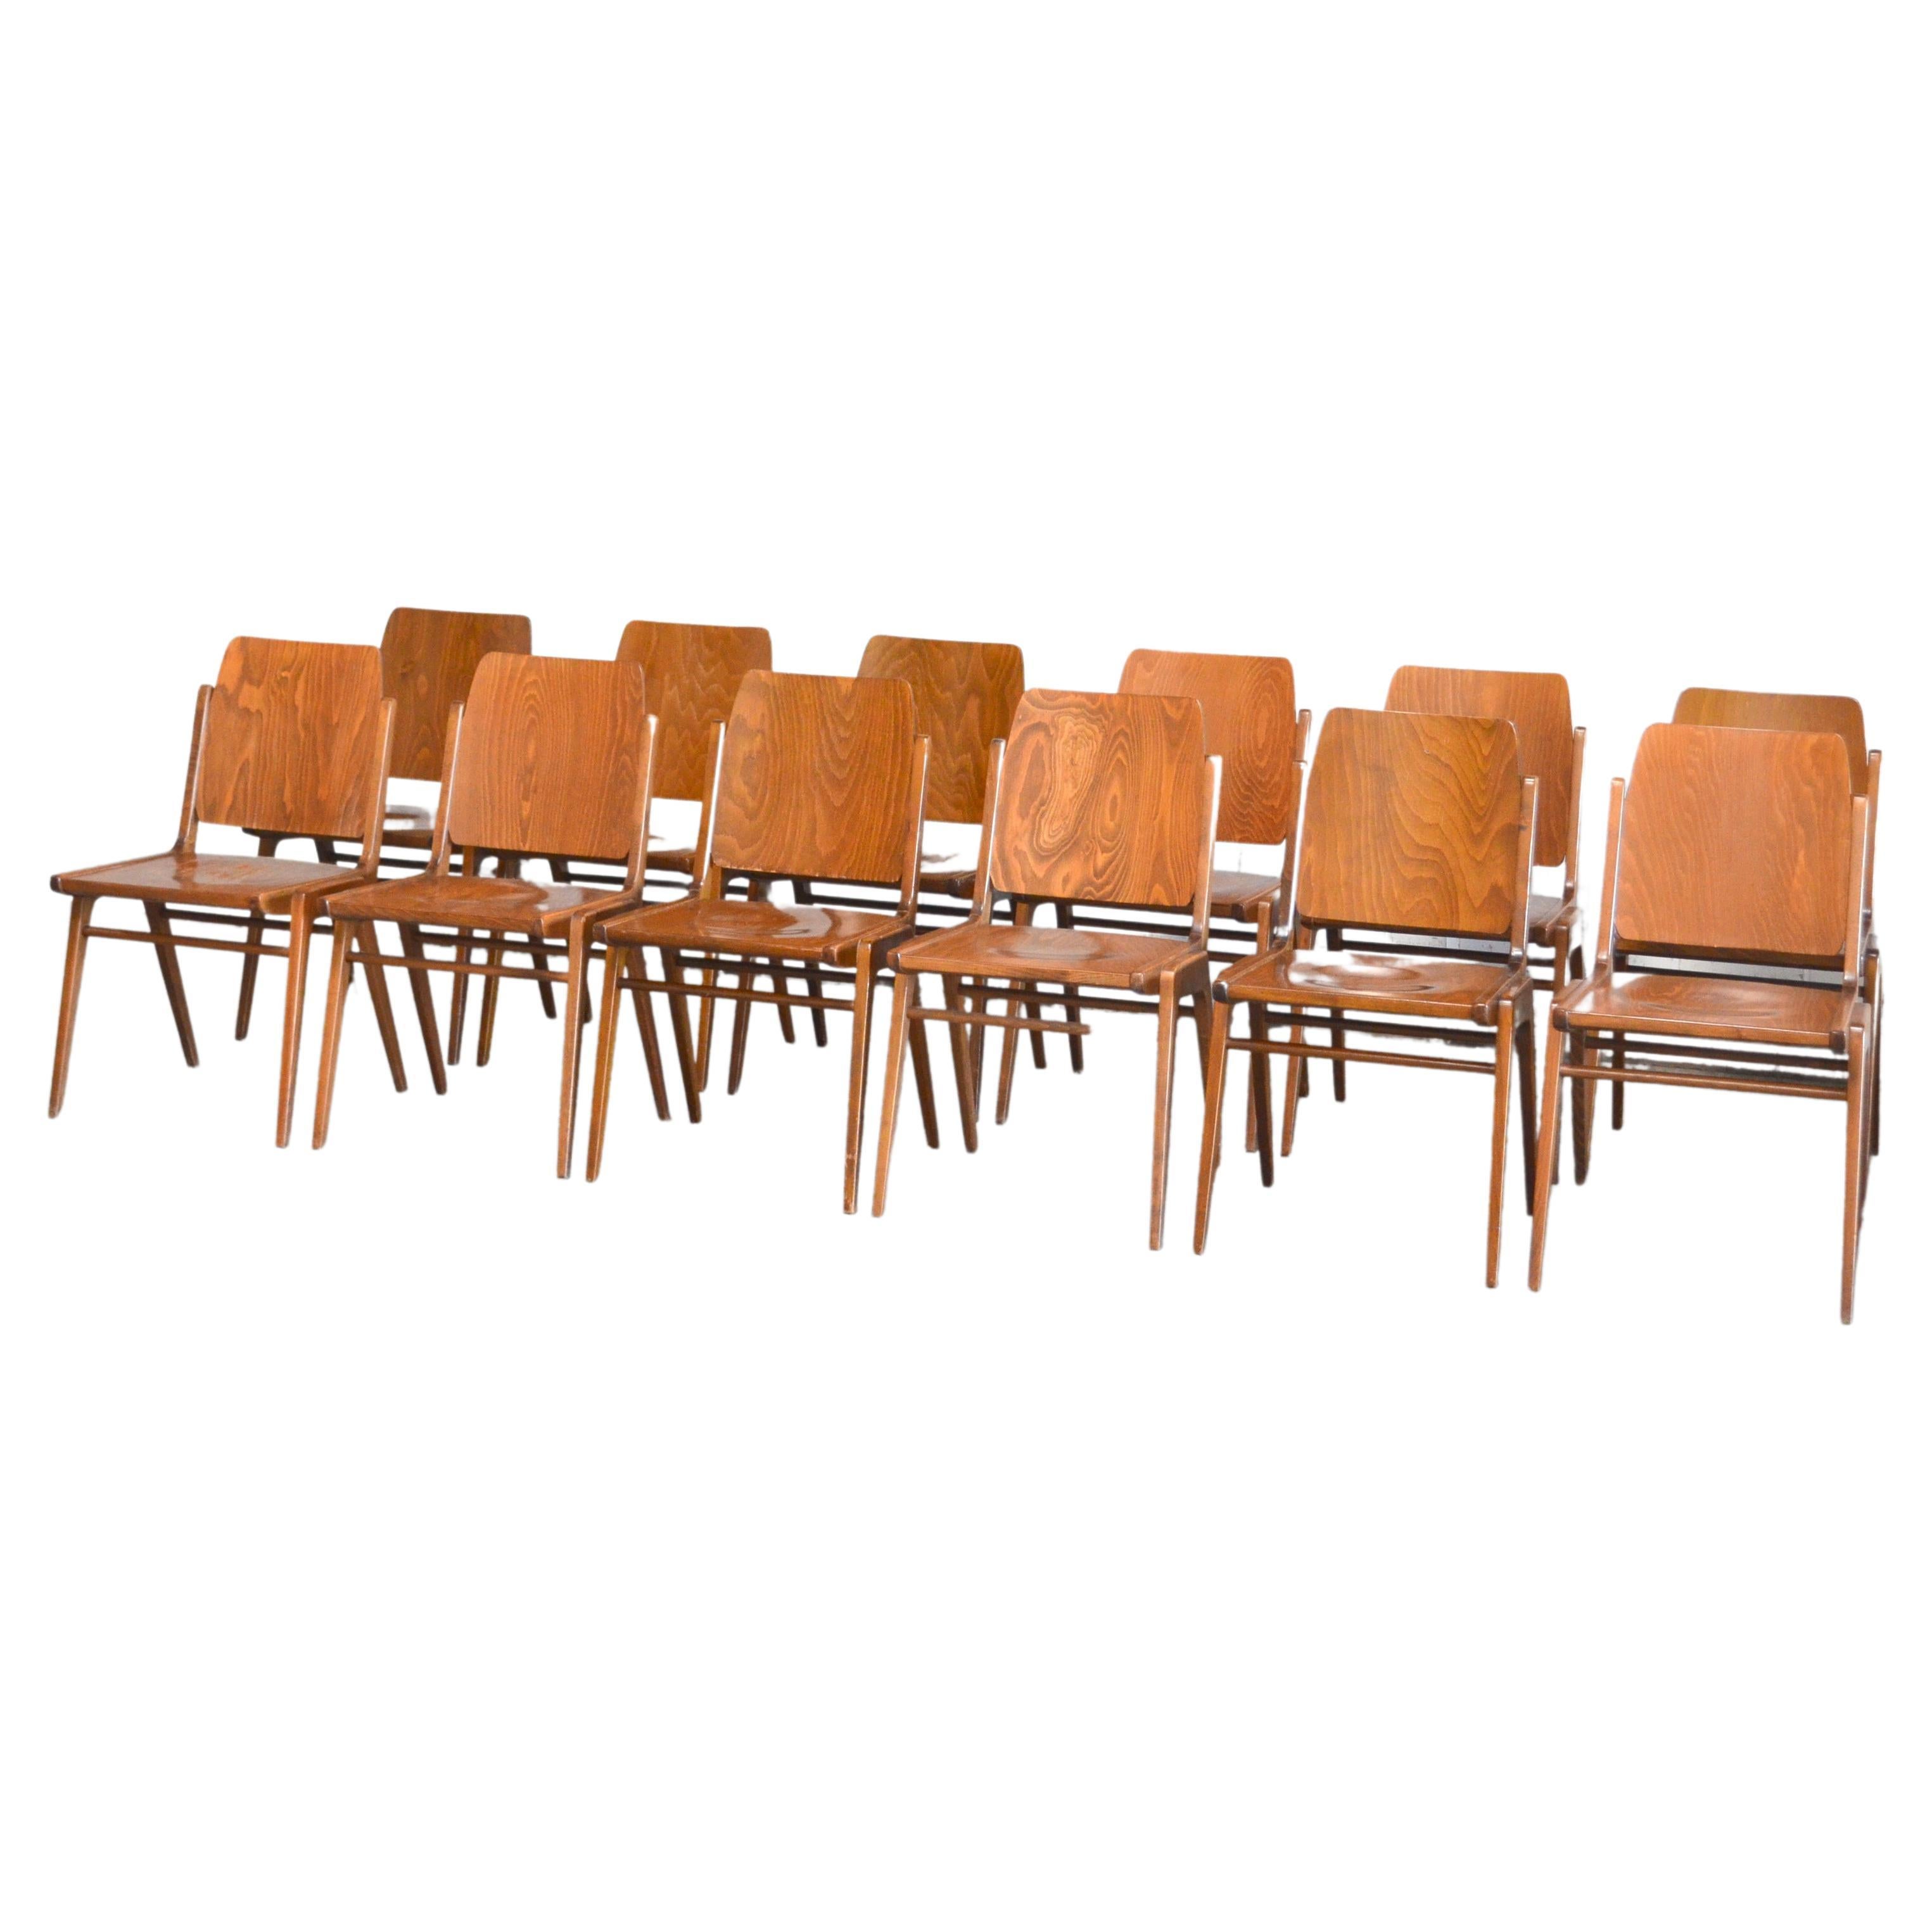 12Set of Original Austro Chairs by Franz Schuster for Wiesner Hager, Austria, 1959